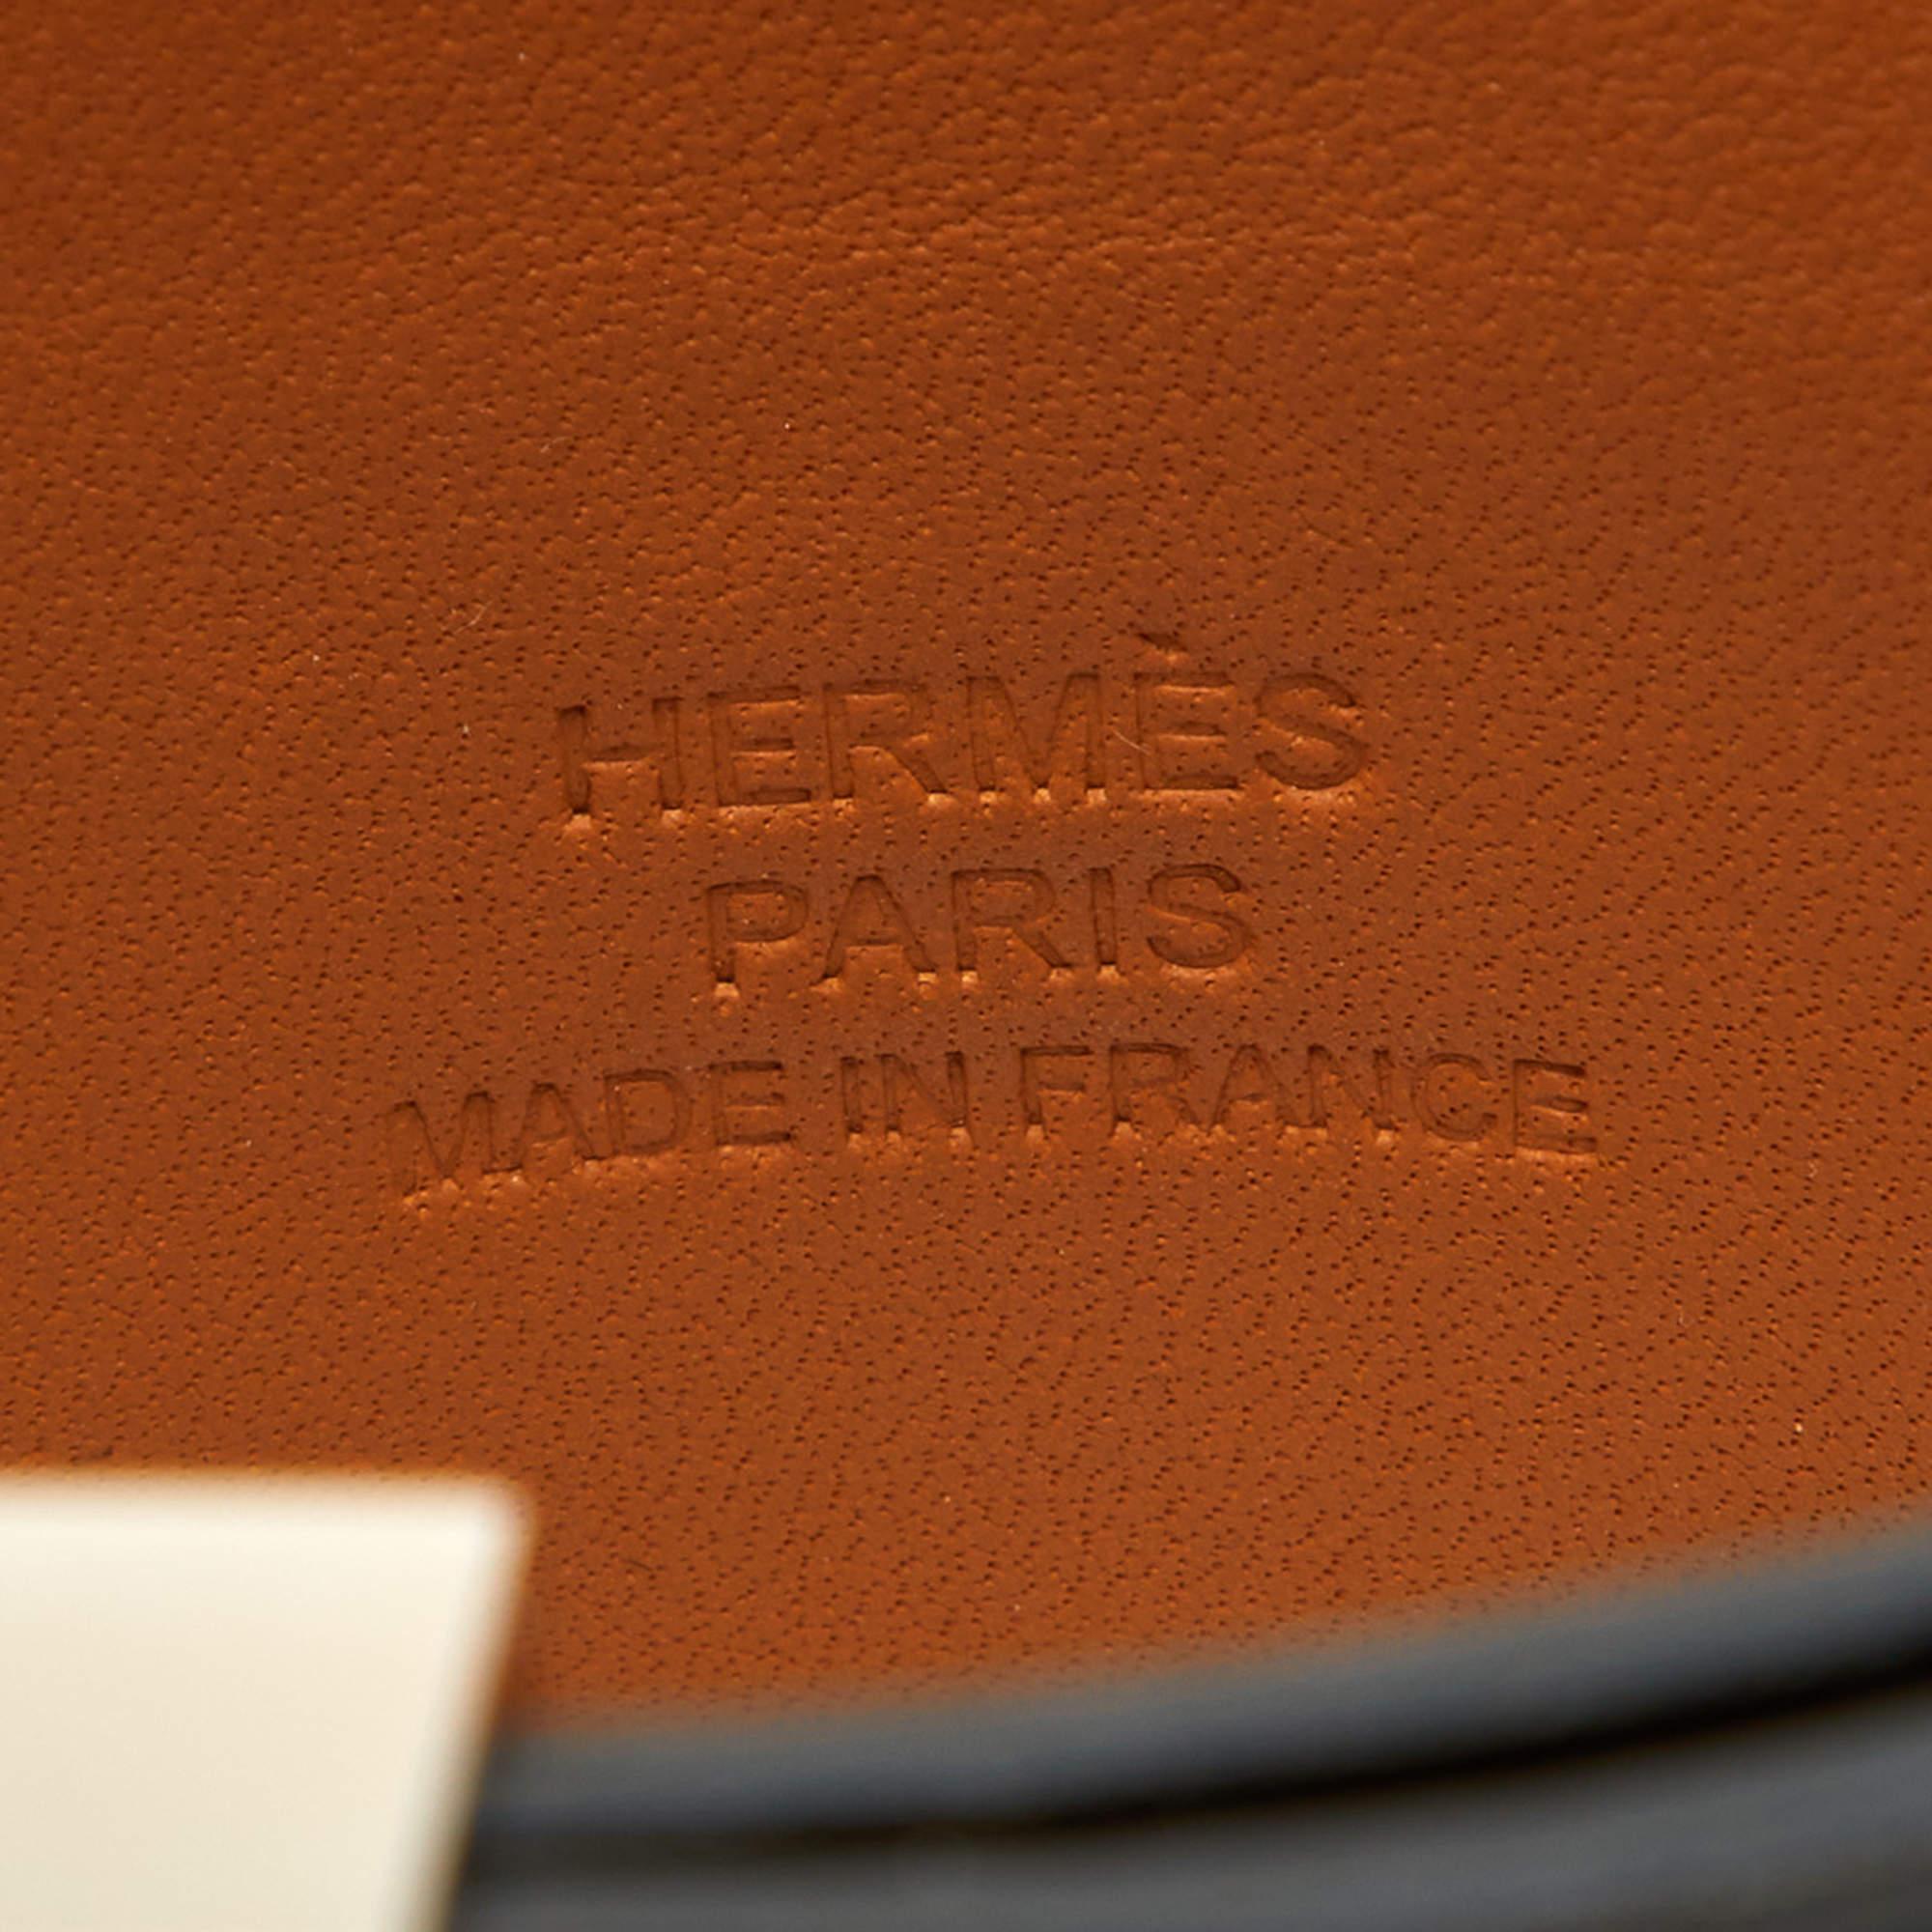 Contemporary Hermes Collier De Chien Black Leather Palladium Plated Wide Cuff Bracelet S